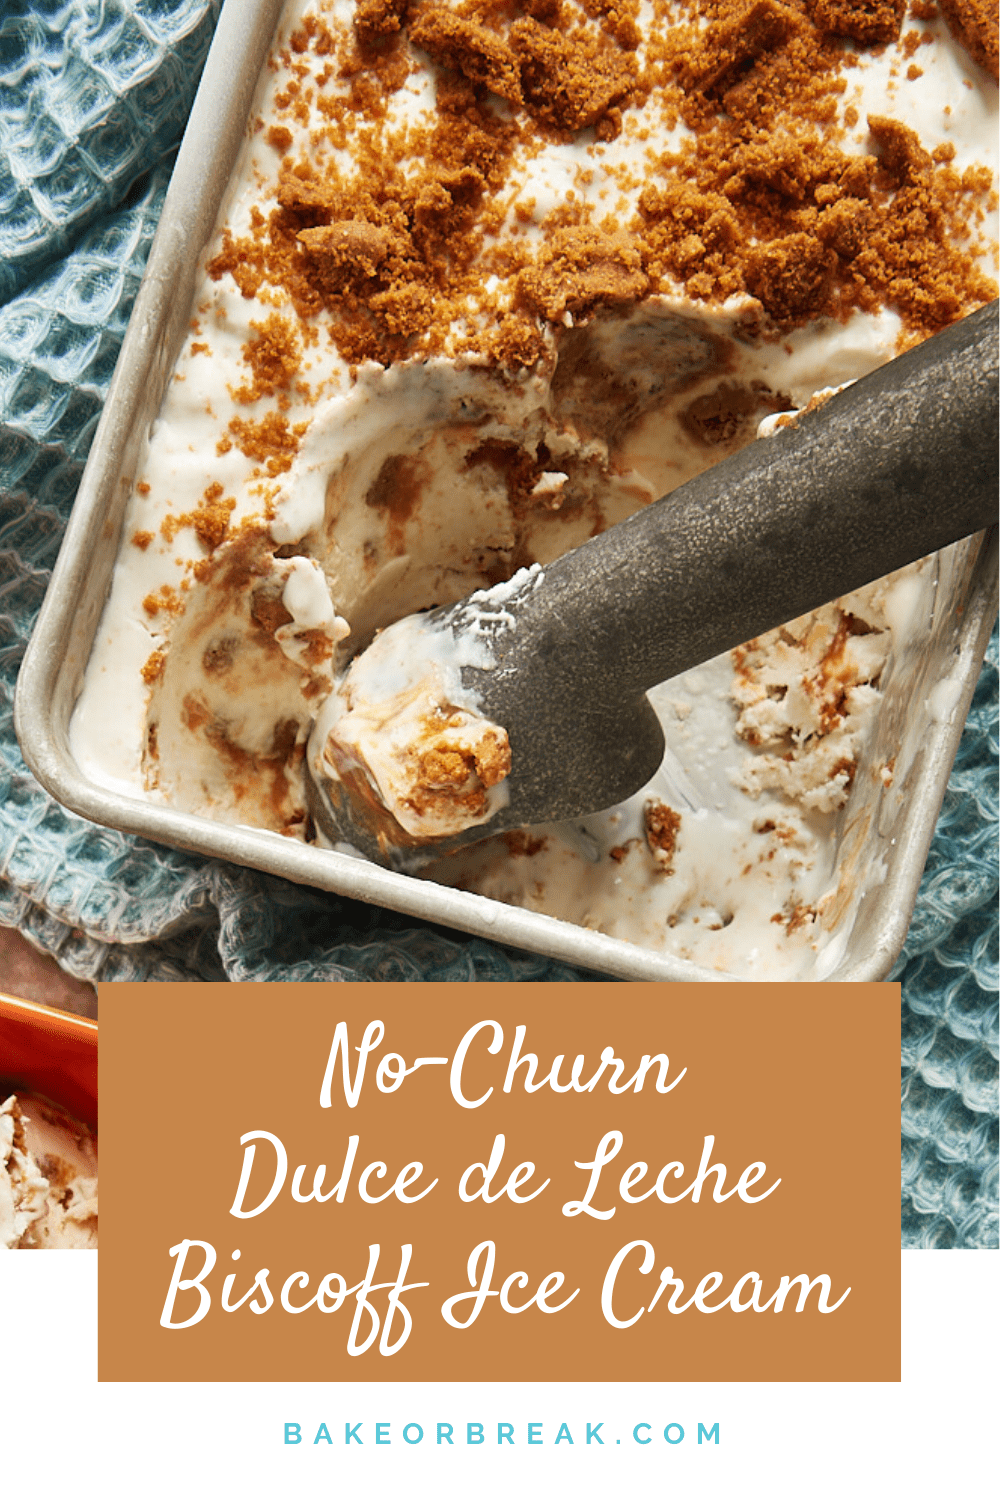 No-Churn Dulce de Leche Biscoff Ice Cream bakeorbreak.com